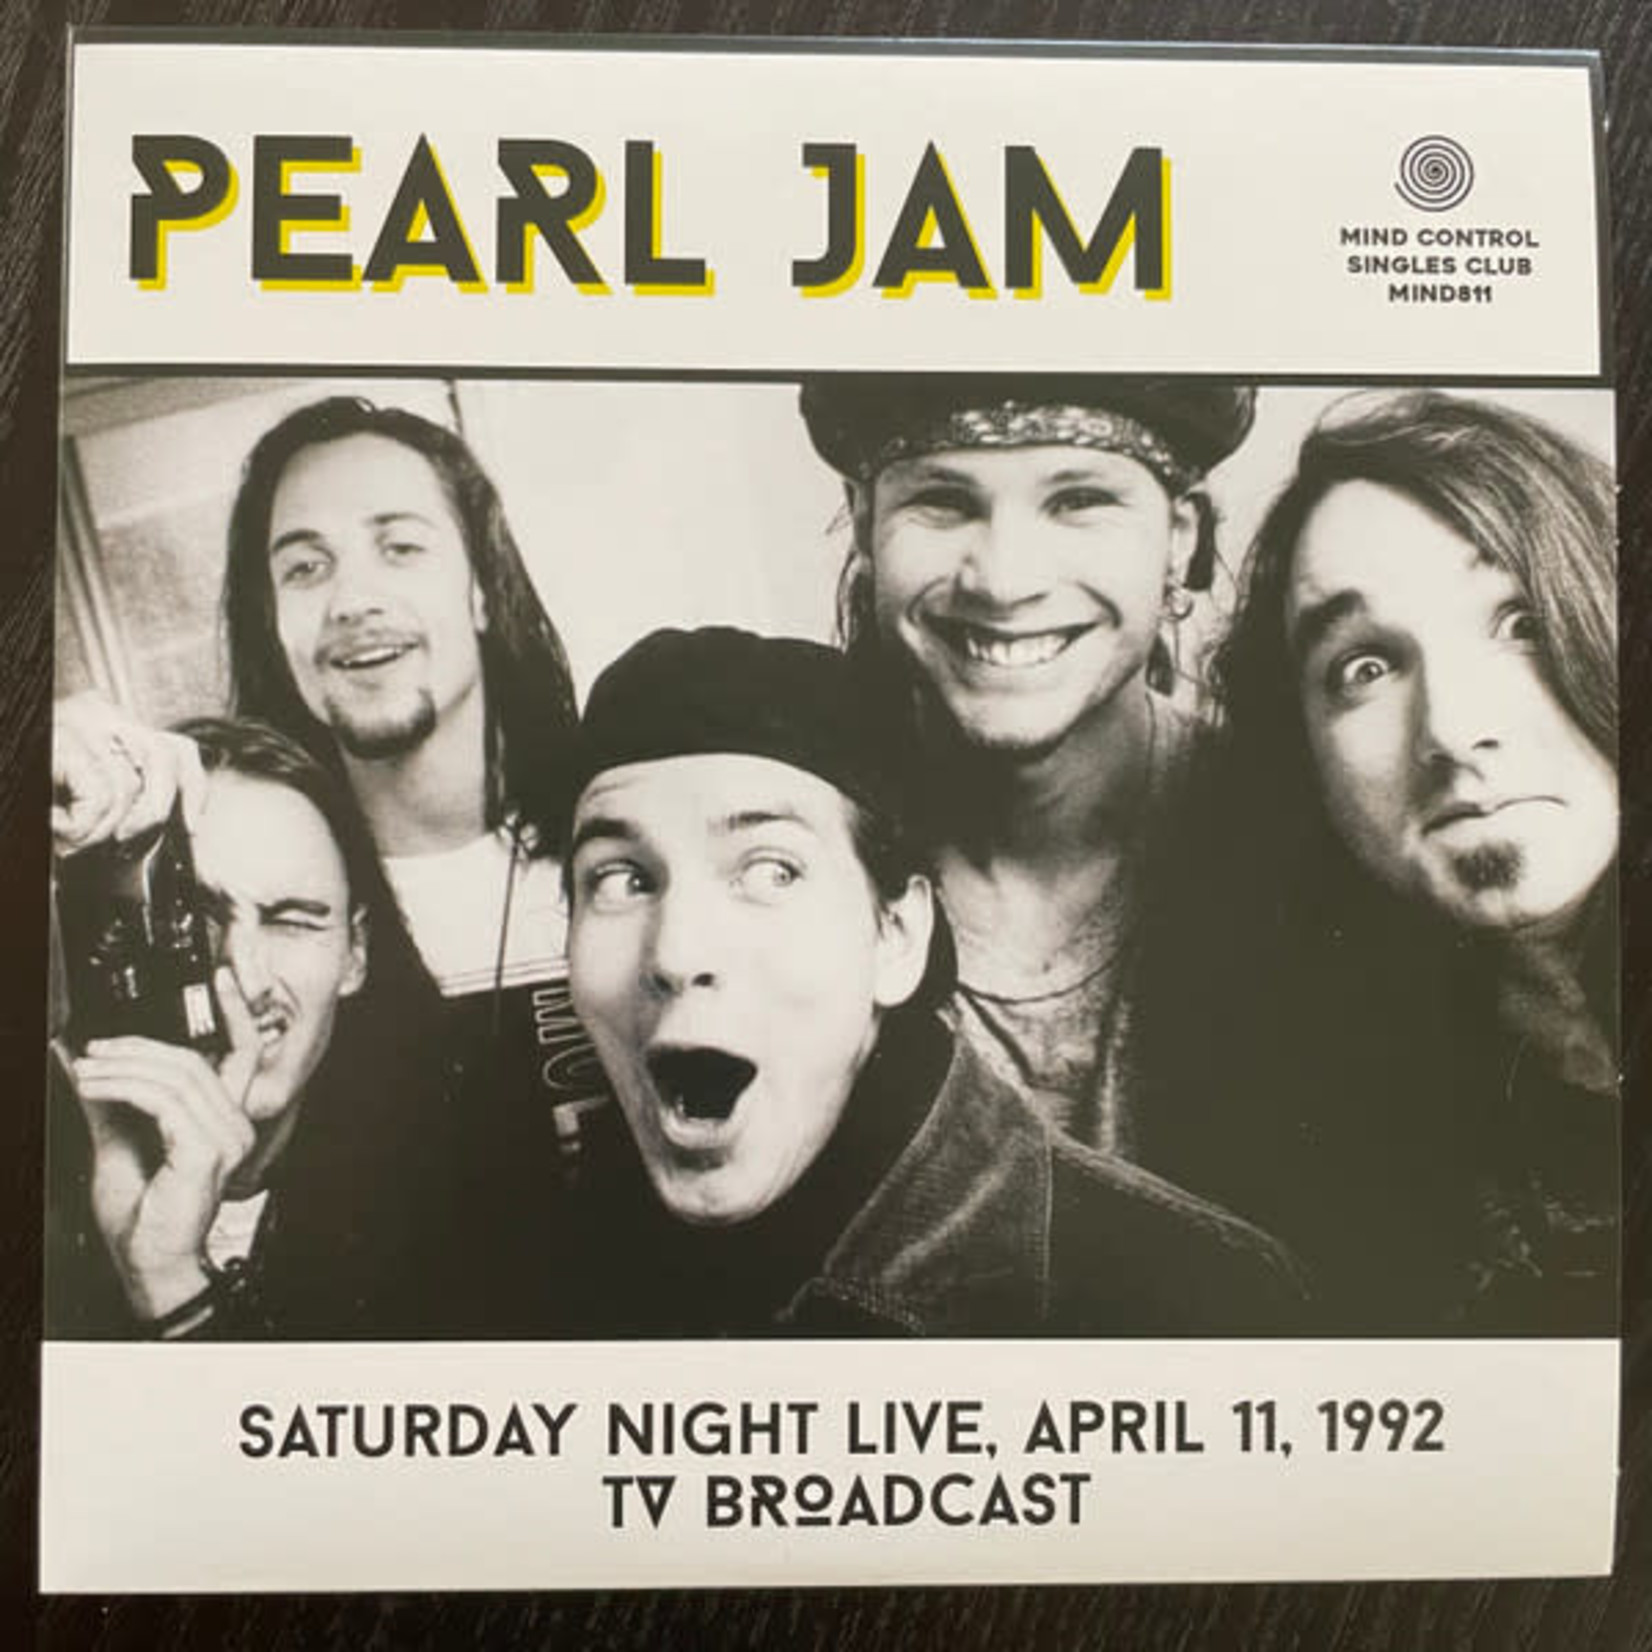 [New] Pearl Jam - Saturday Night Live, April 11, 1992 - TV BROADCAST (7")